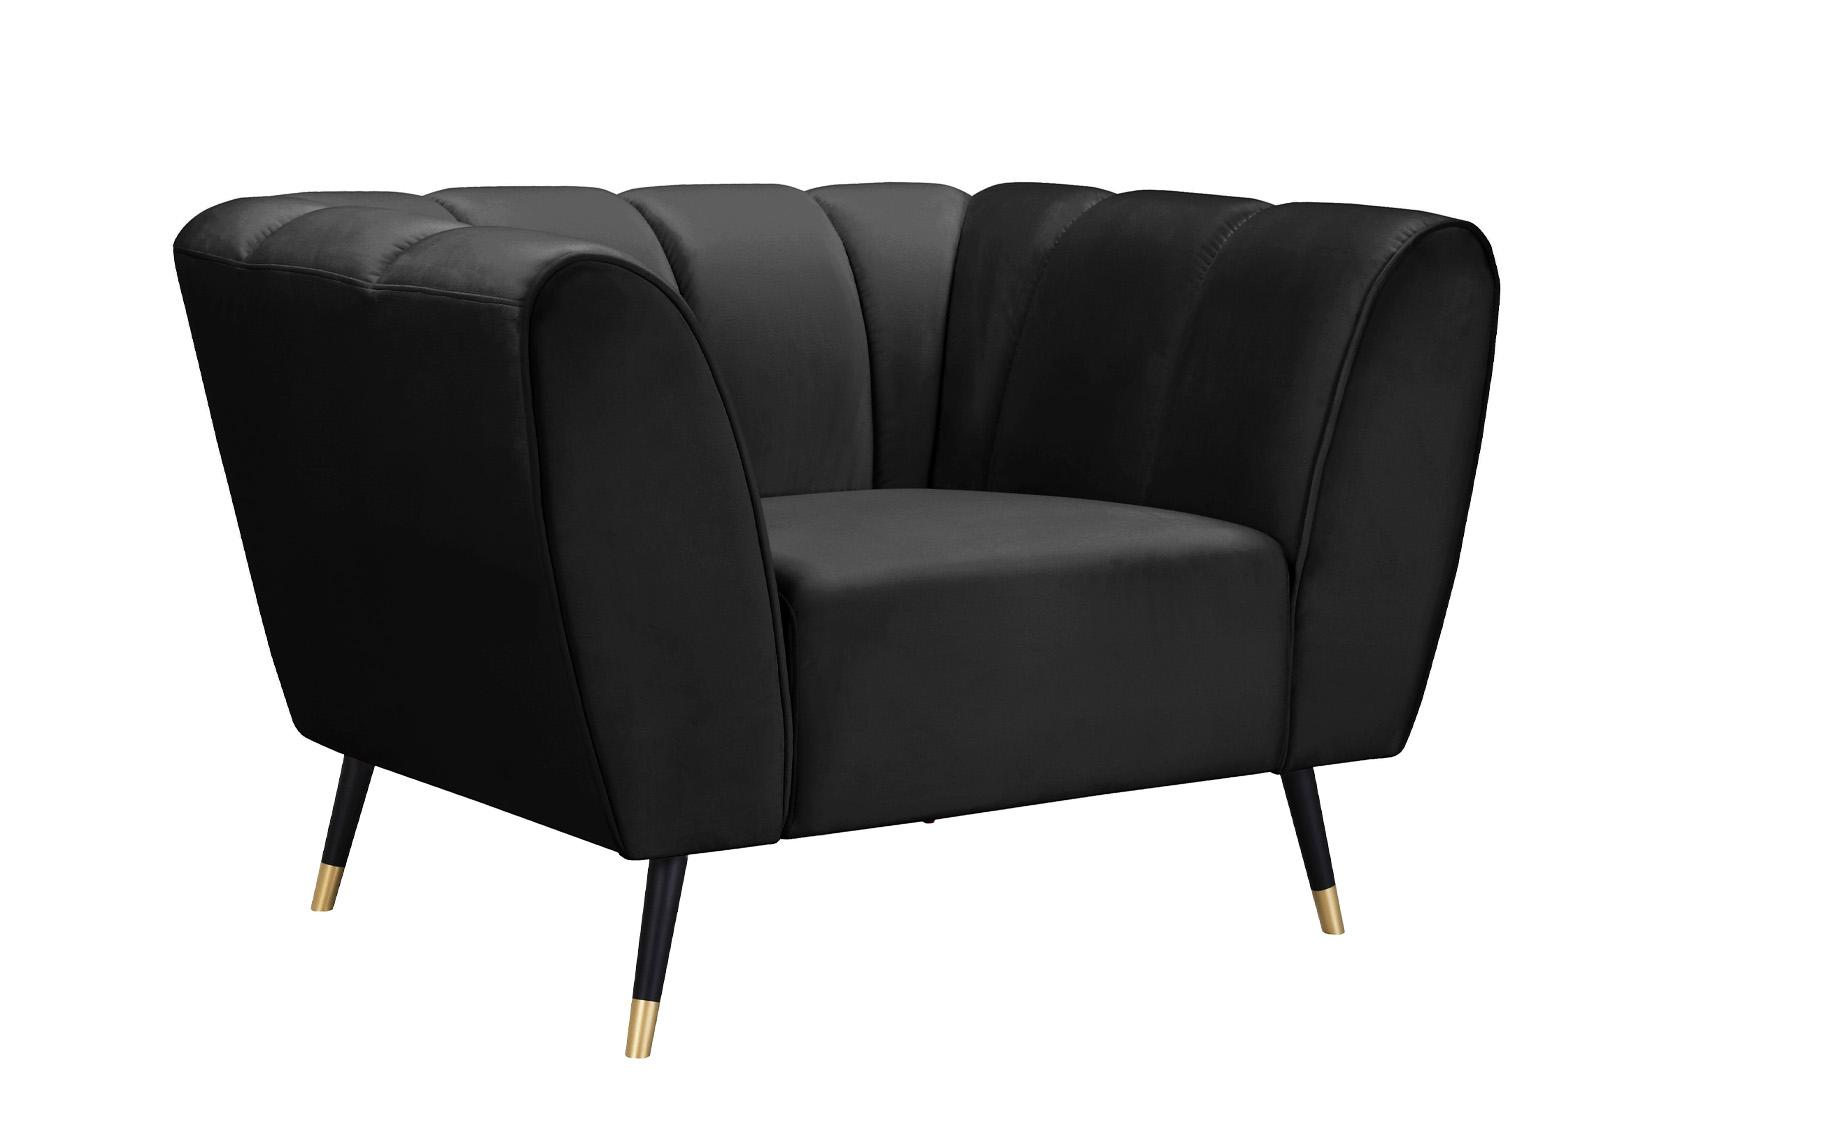 Contemporary, Modern Arm Chair BEAUMONT 626Black-C 626Black-C in Black Velvet